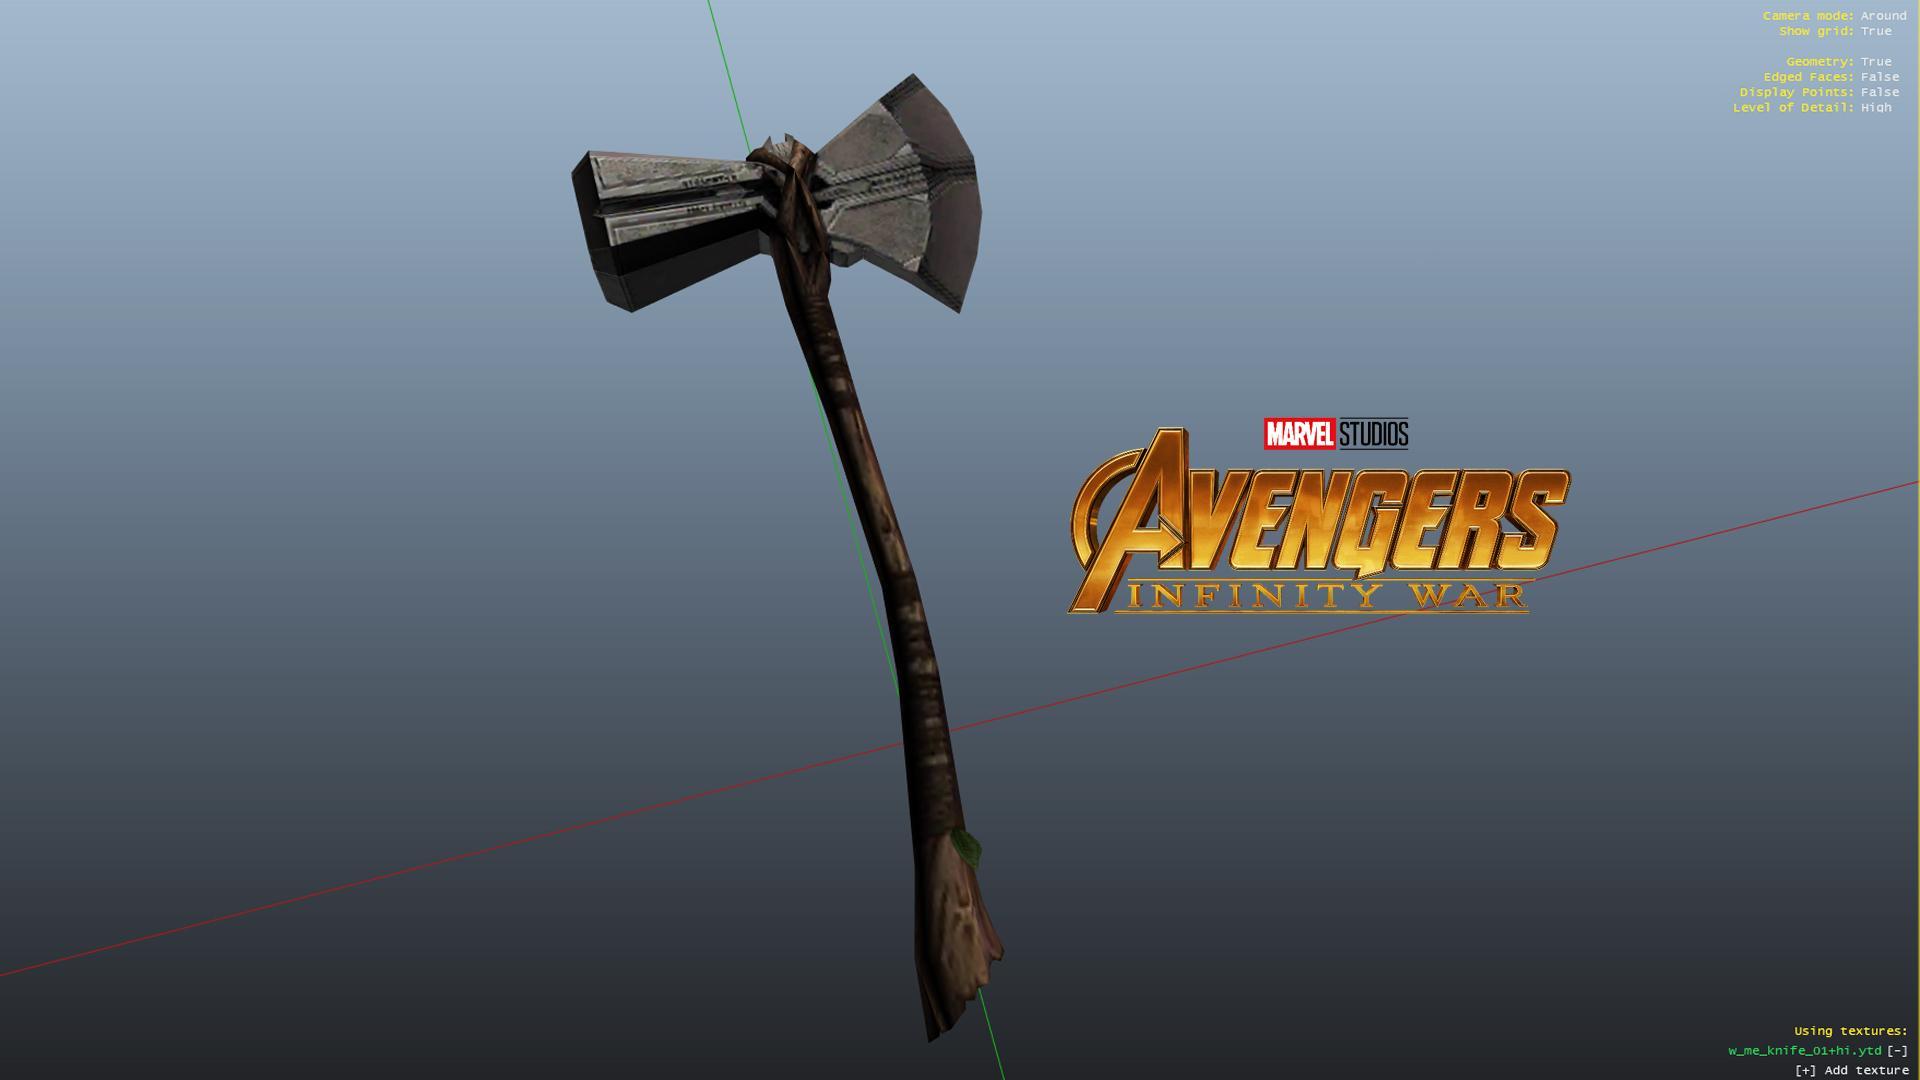 Storm Breaker (Avengers Infinity War Thor's weapon)